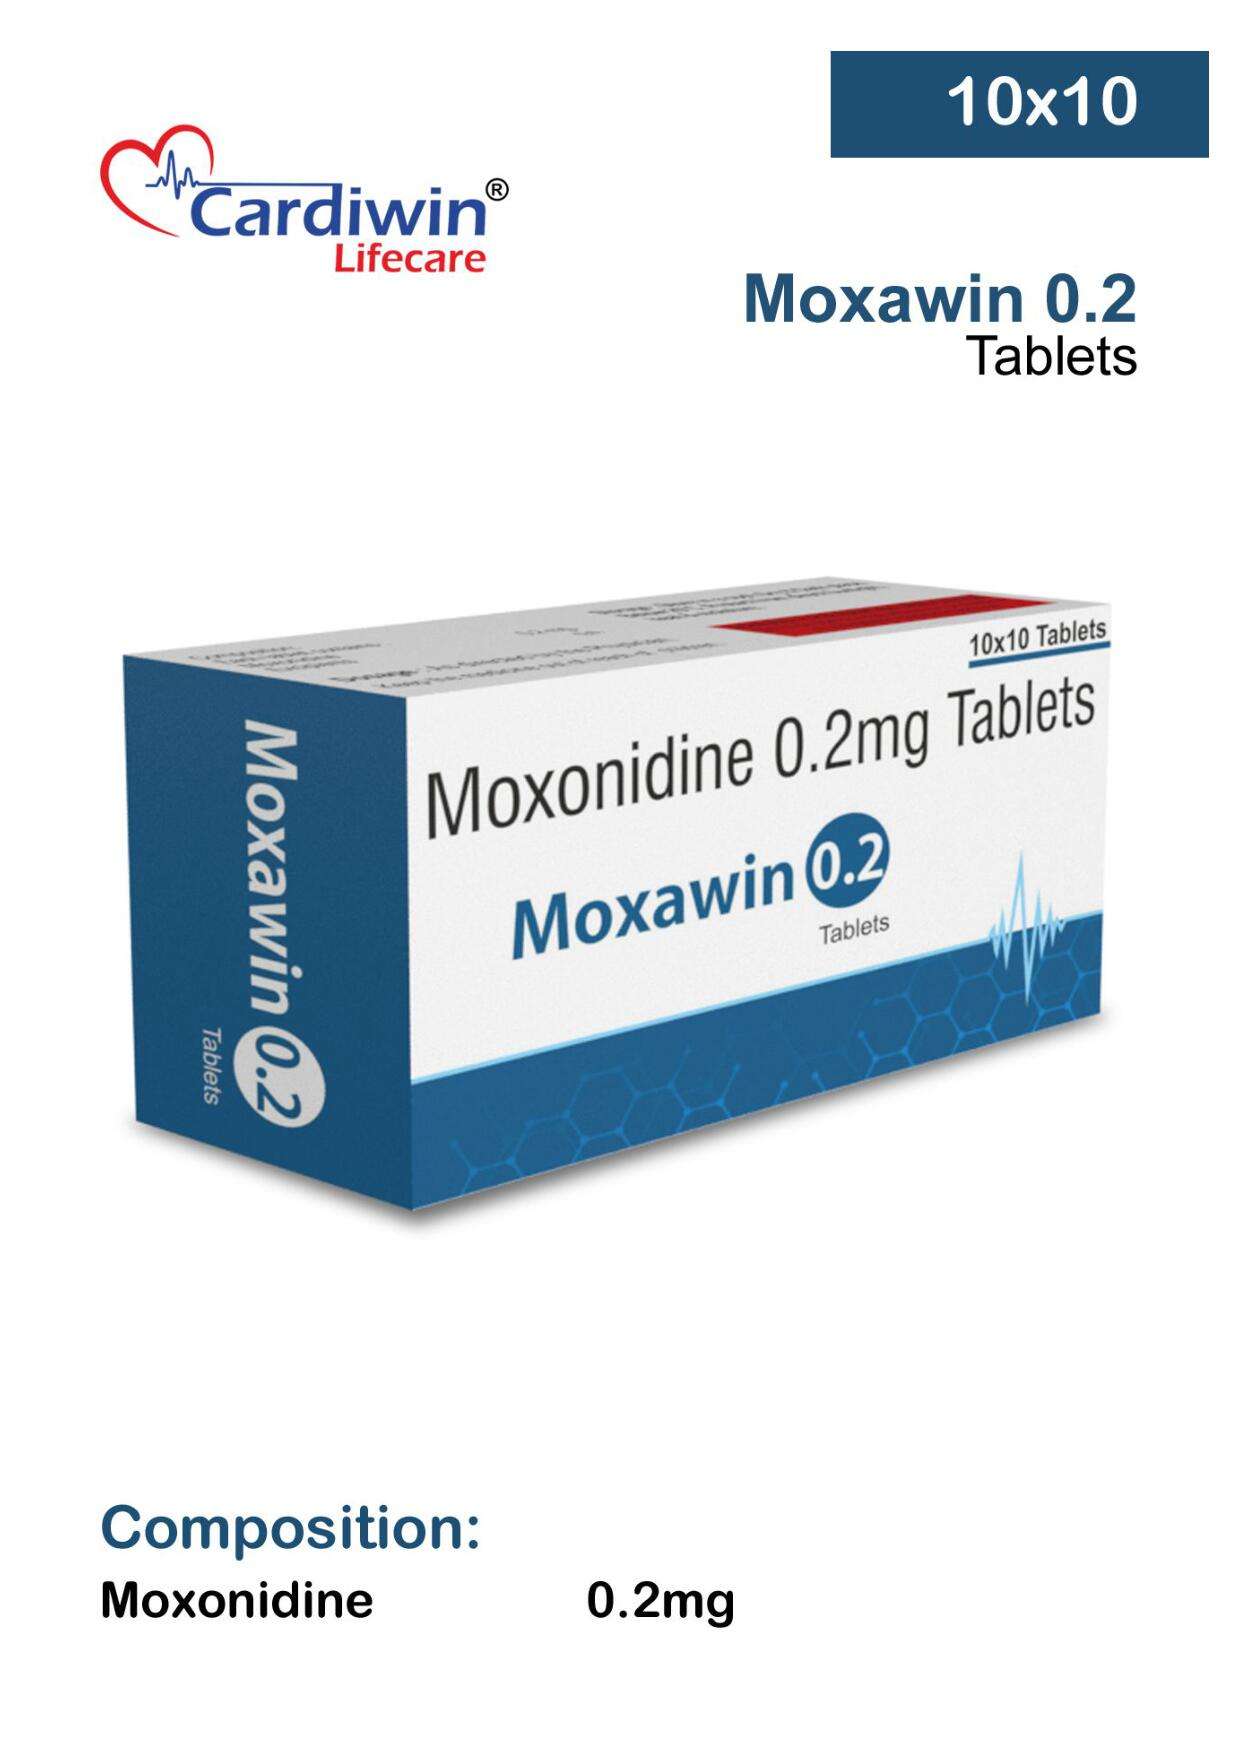 moxonidine 0.2mg